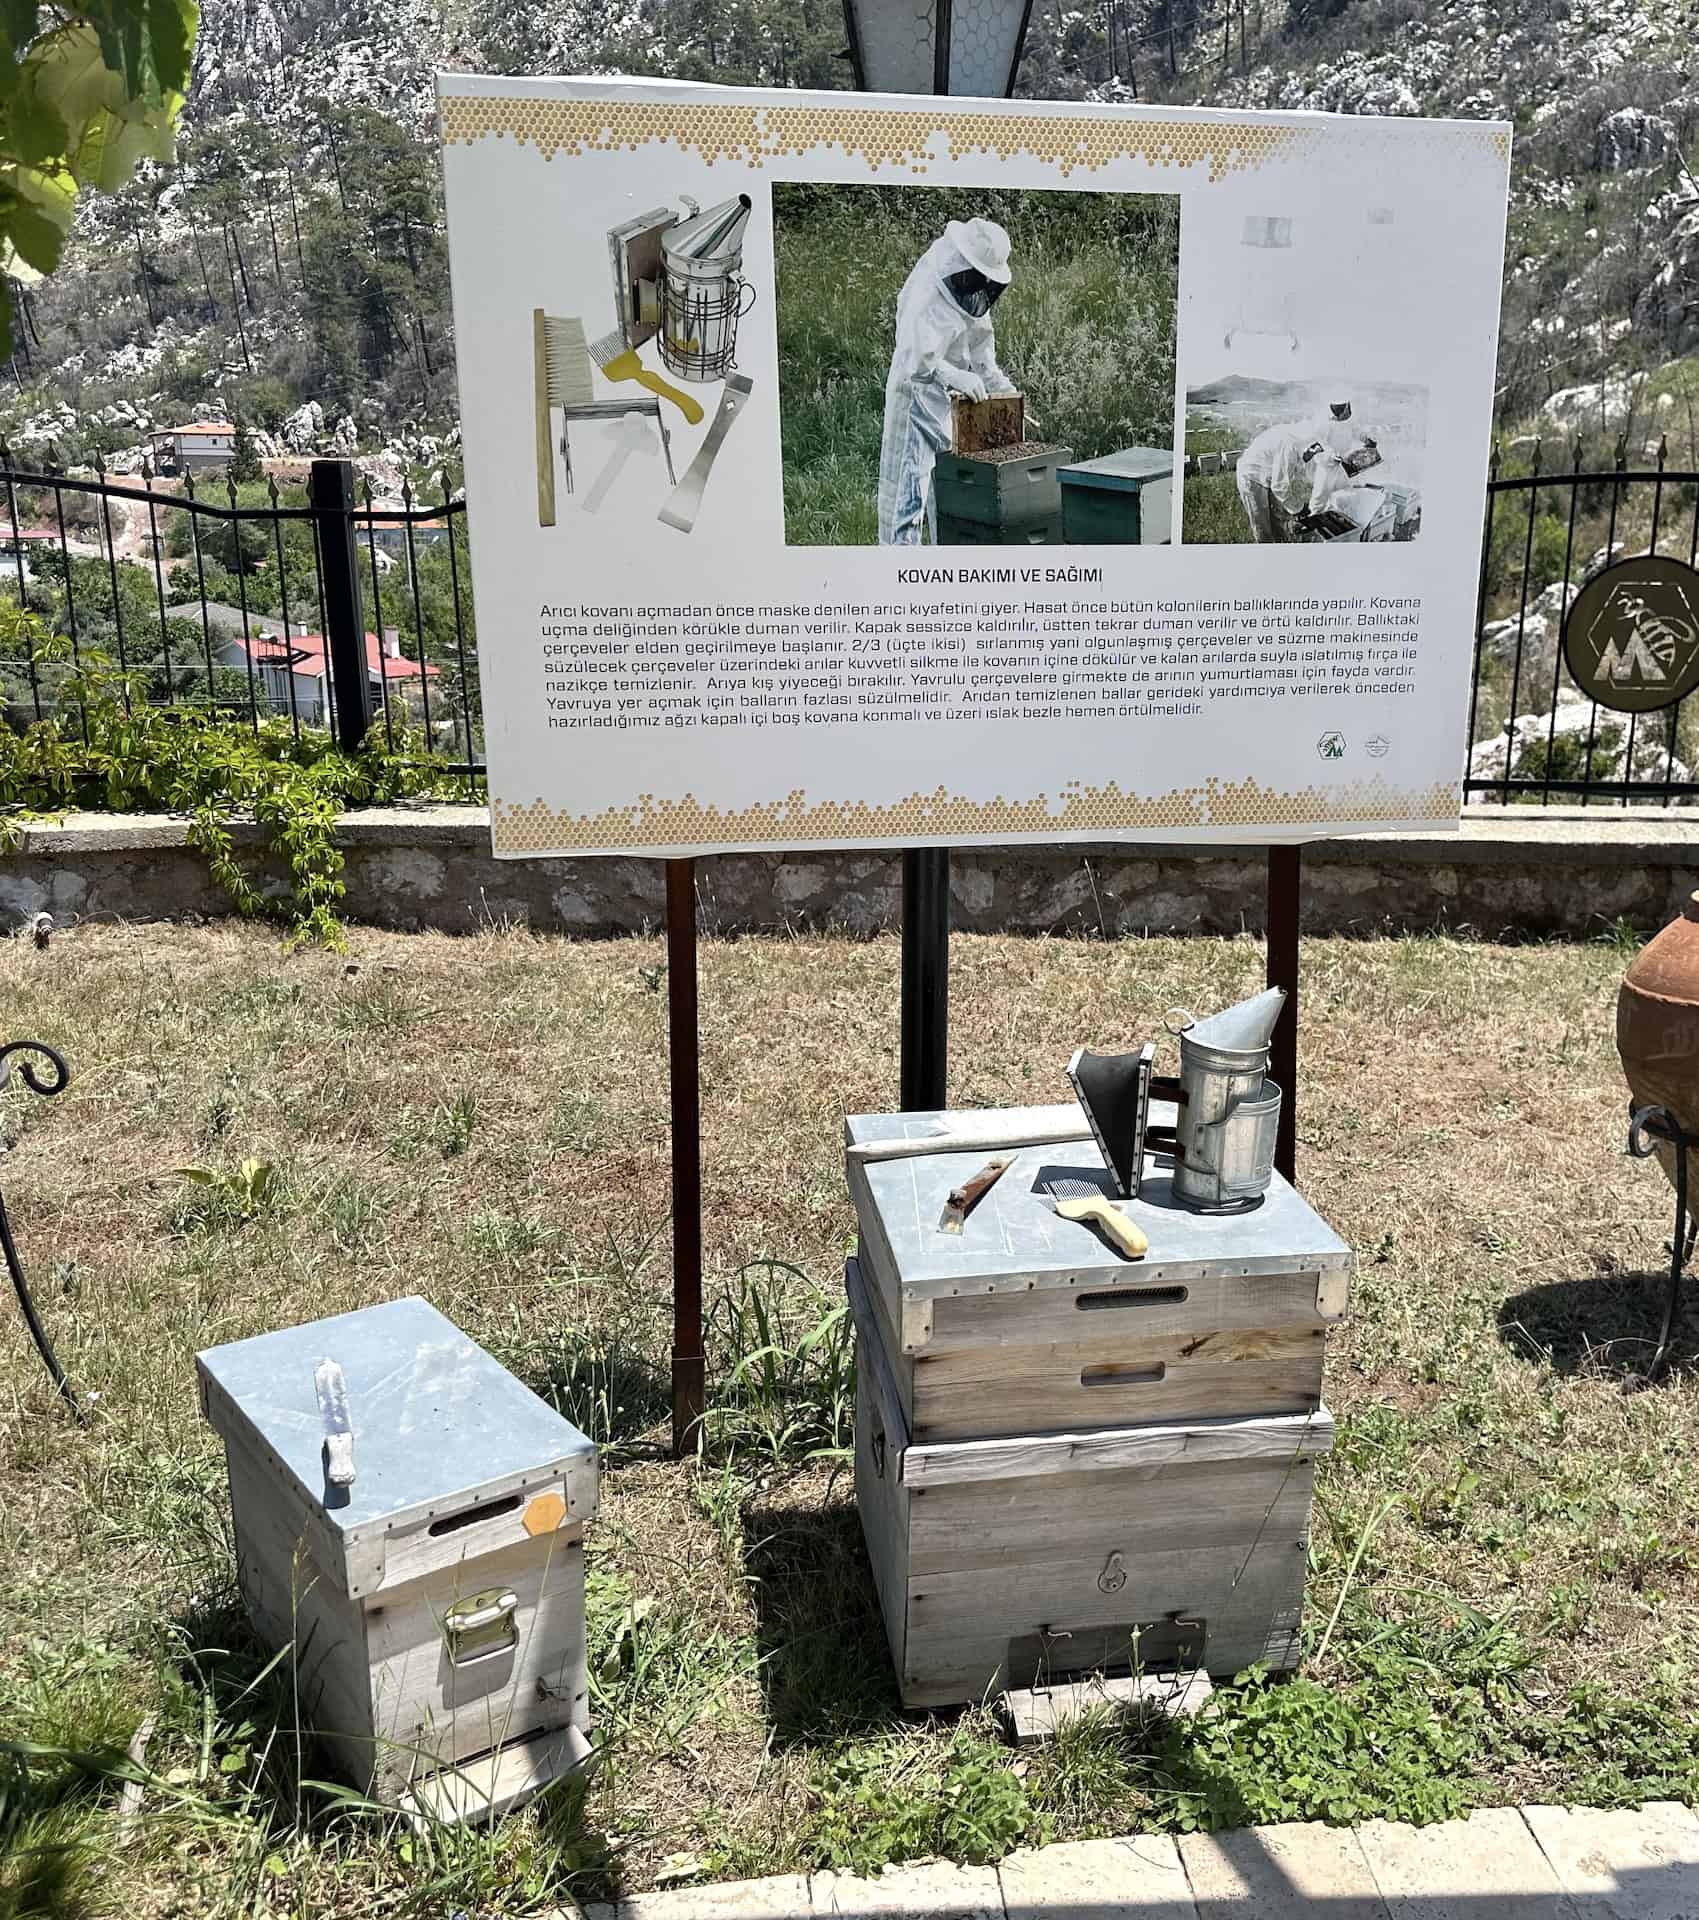 Hive care at the Marmaris Honey House on the Bozburun Peninsula, Turkey